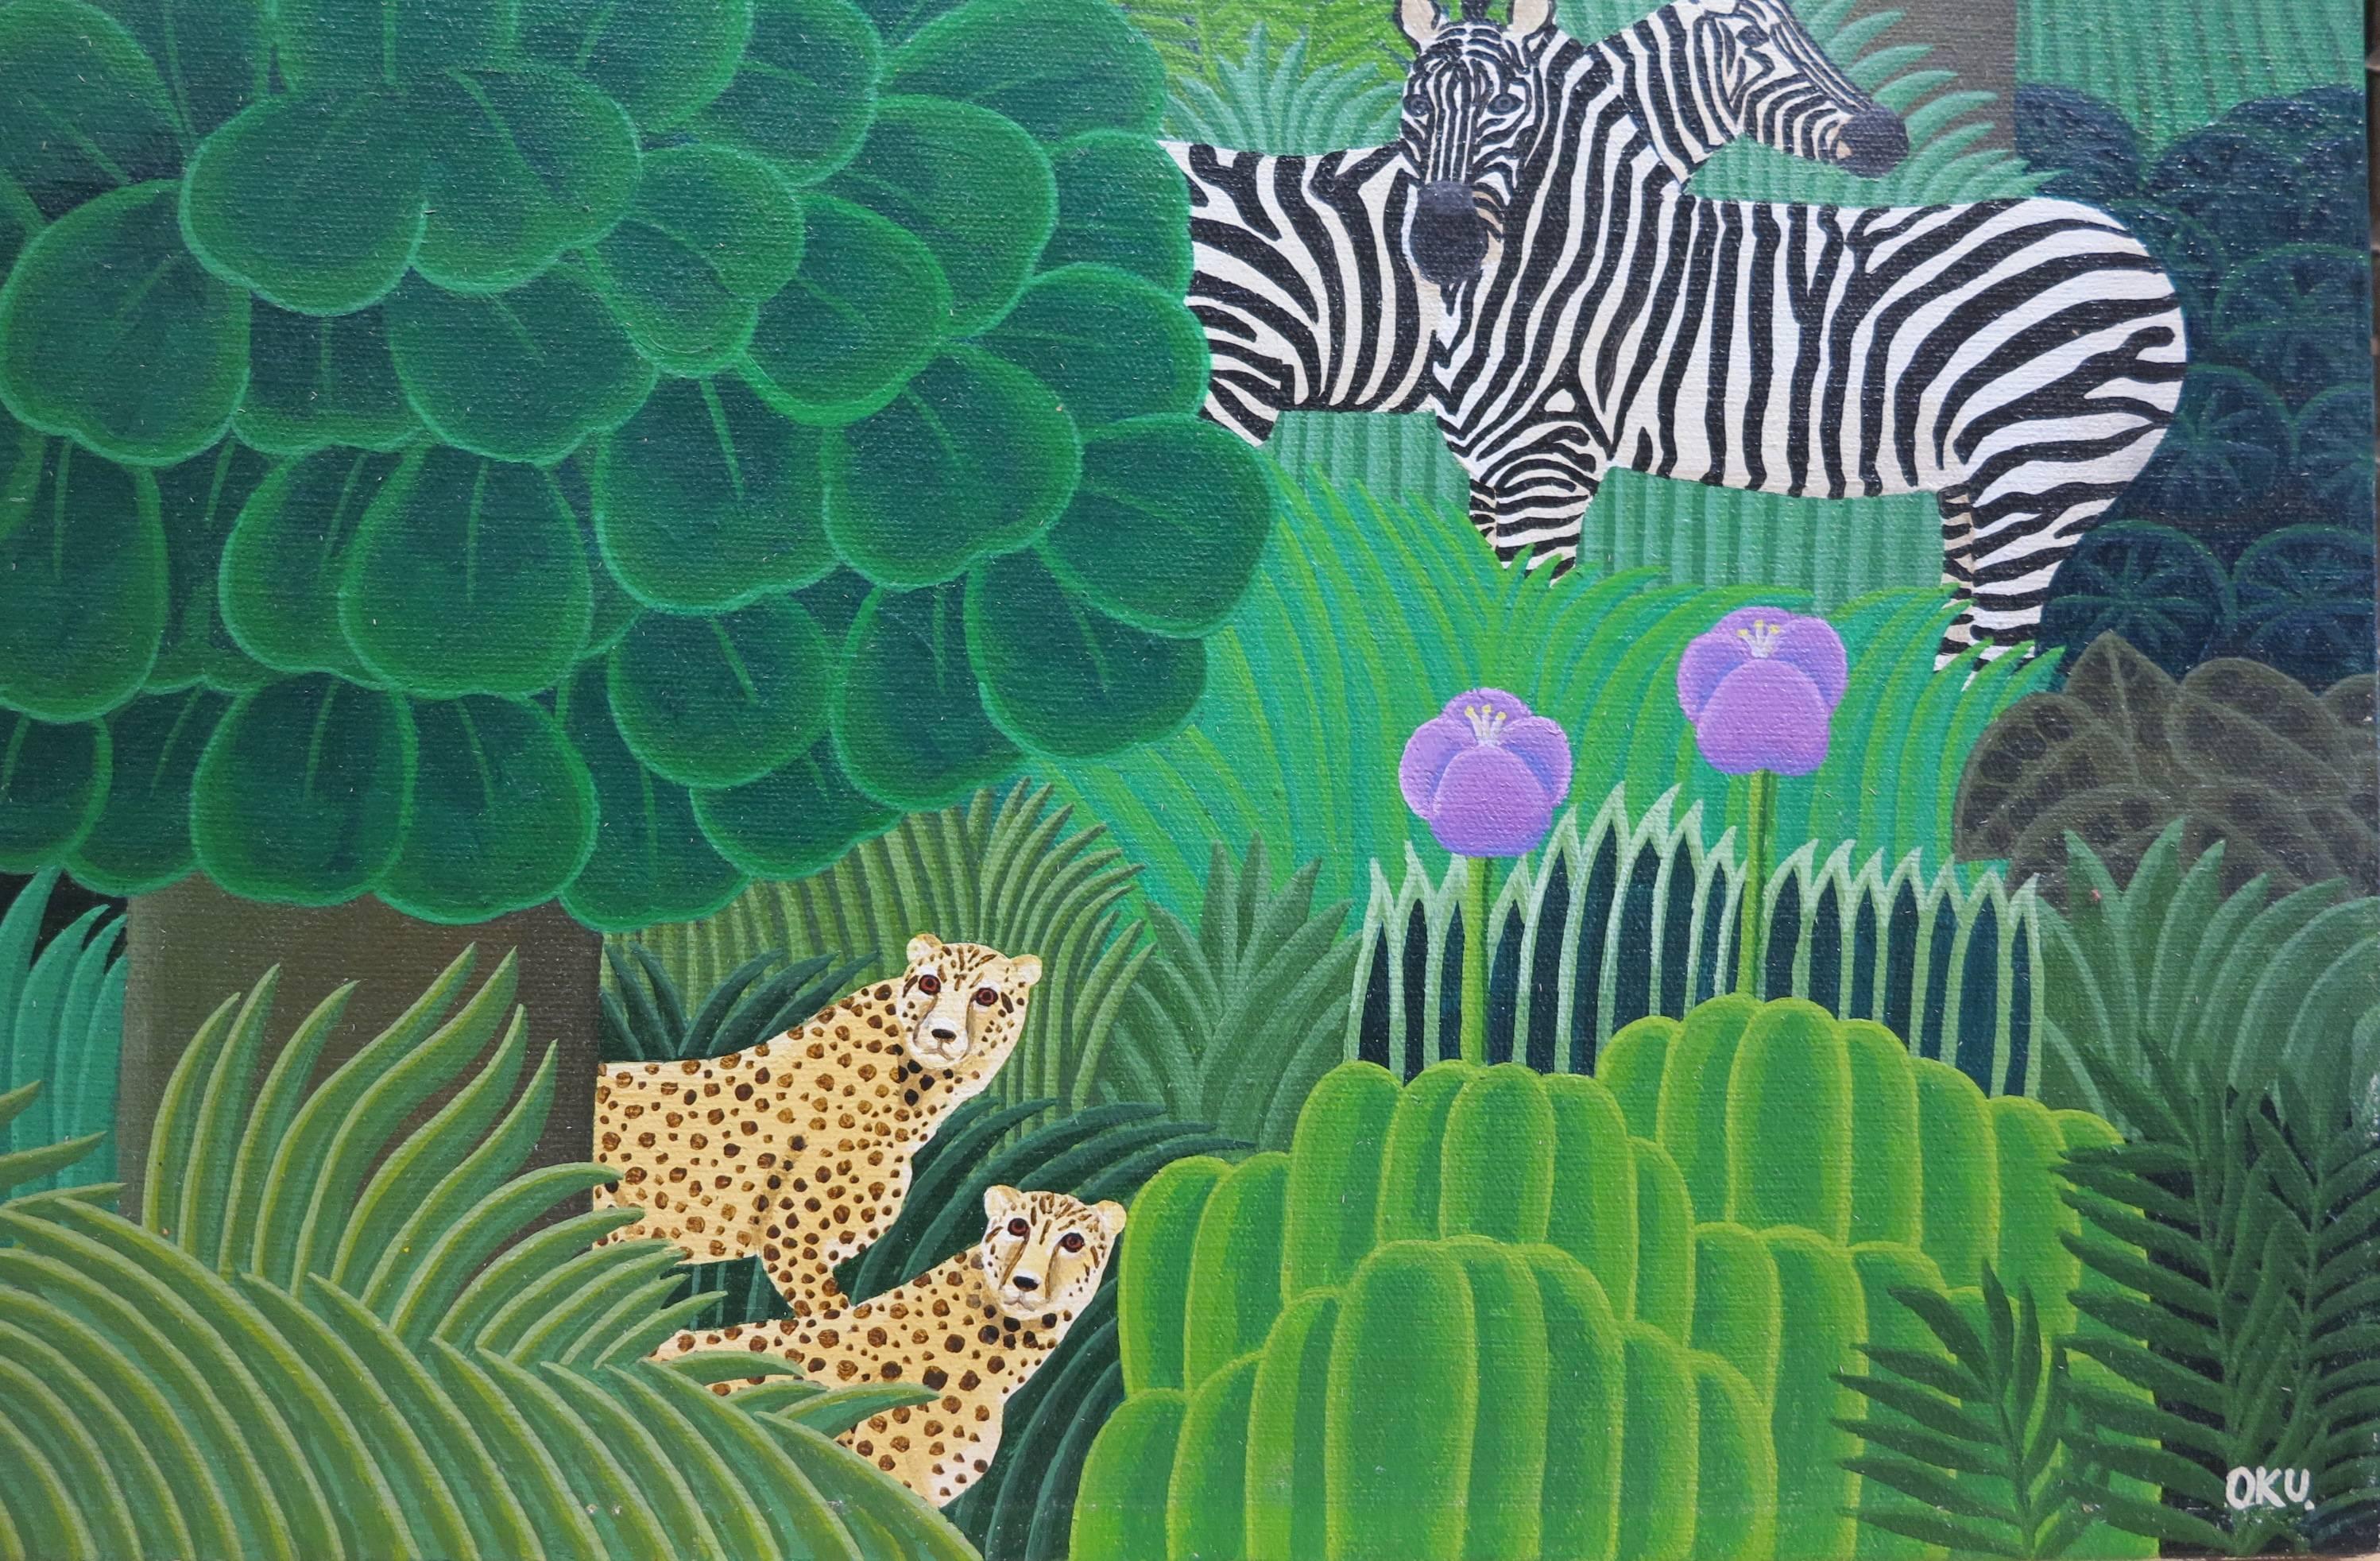 Savanna and Jungle - Green Animal Painting by Shigeo Okumura